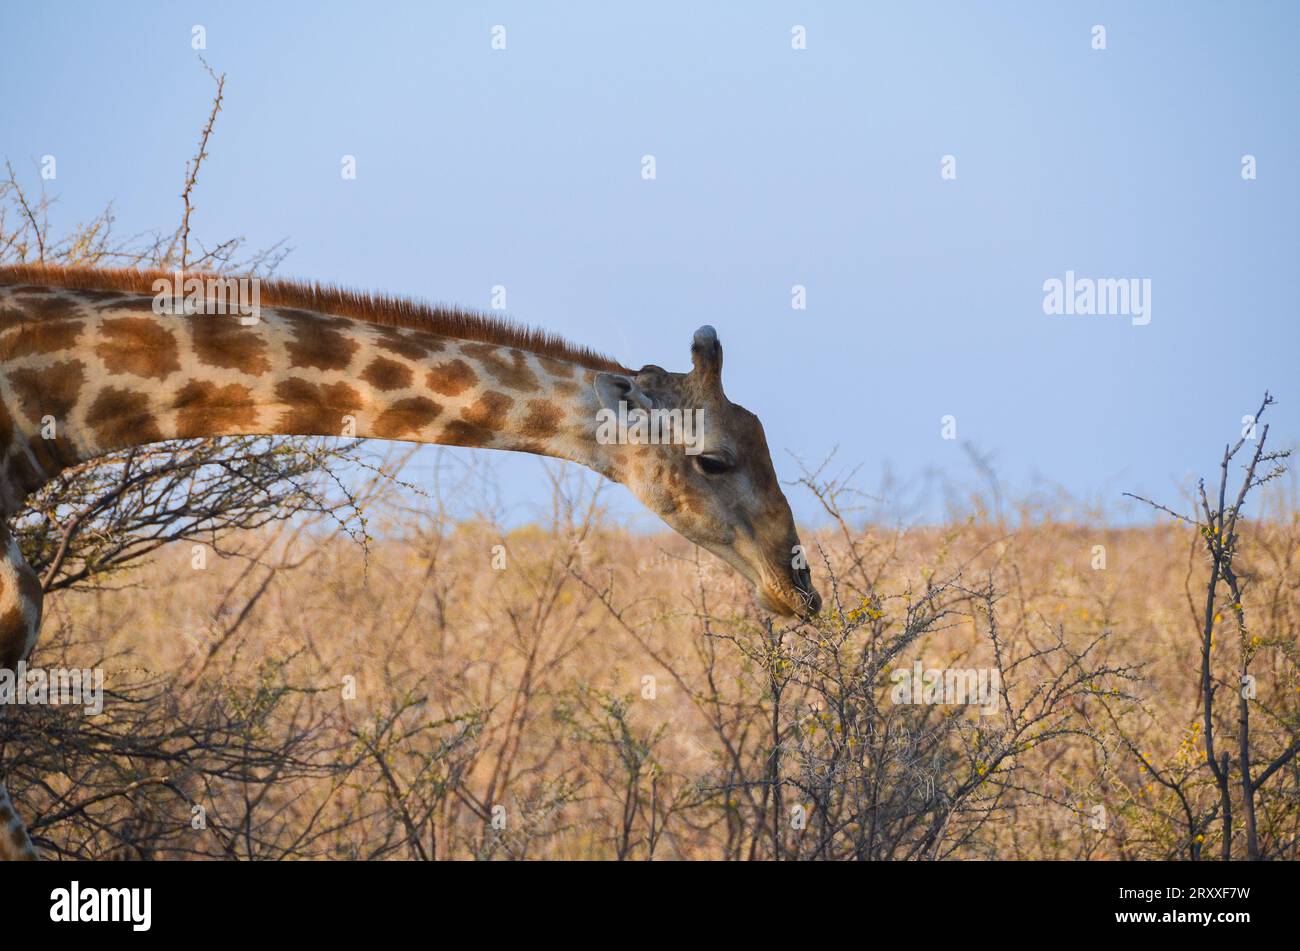 giraffe eating in namibia Stock Photo